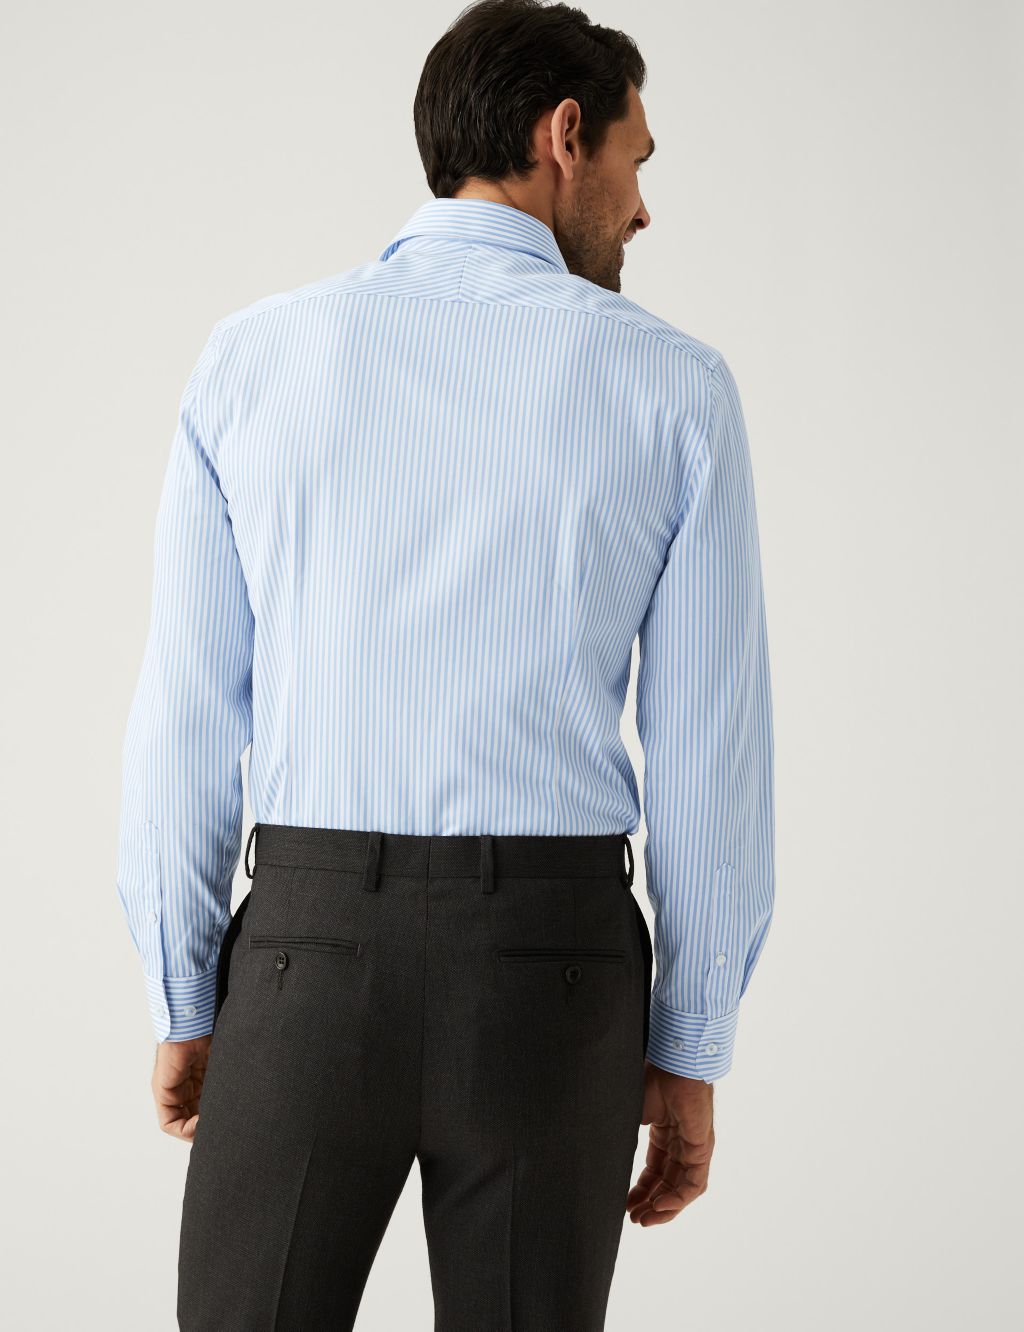 Slim Fit Pure Cotton Striped Shirt image 4